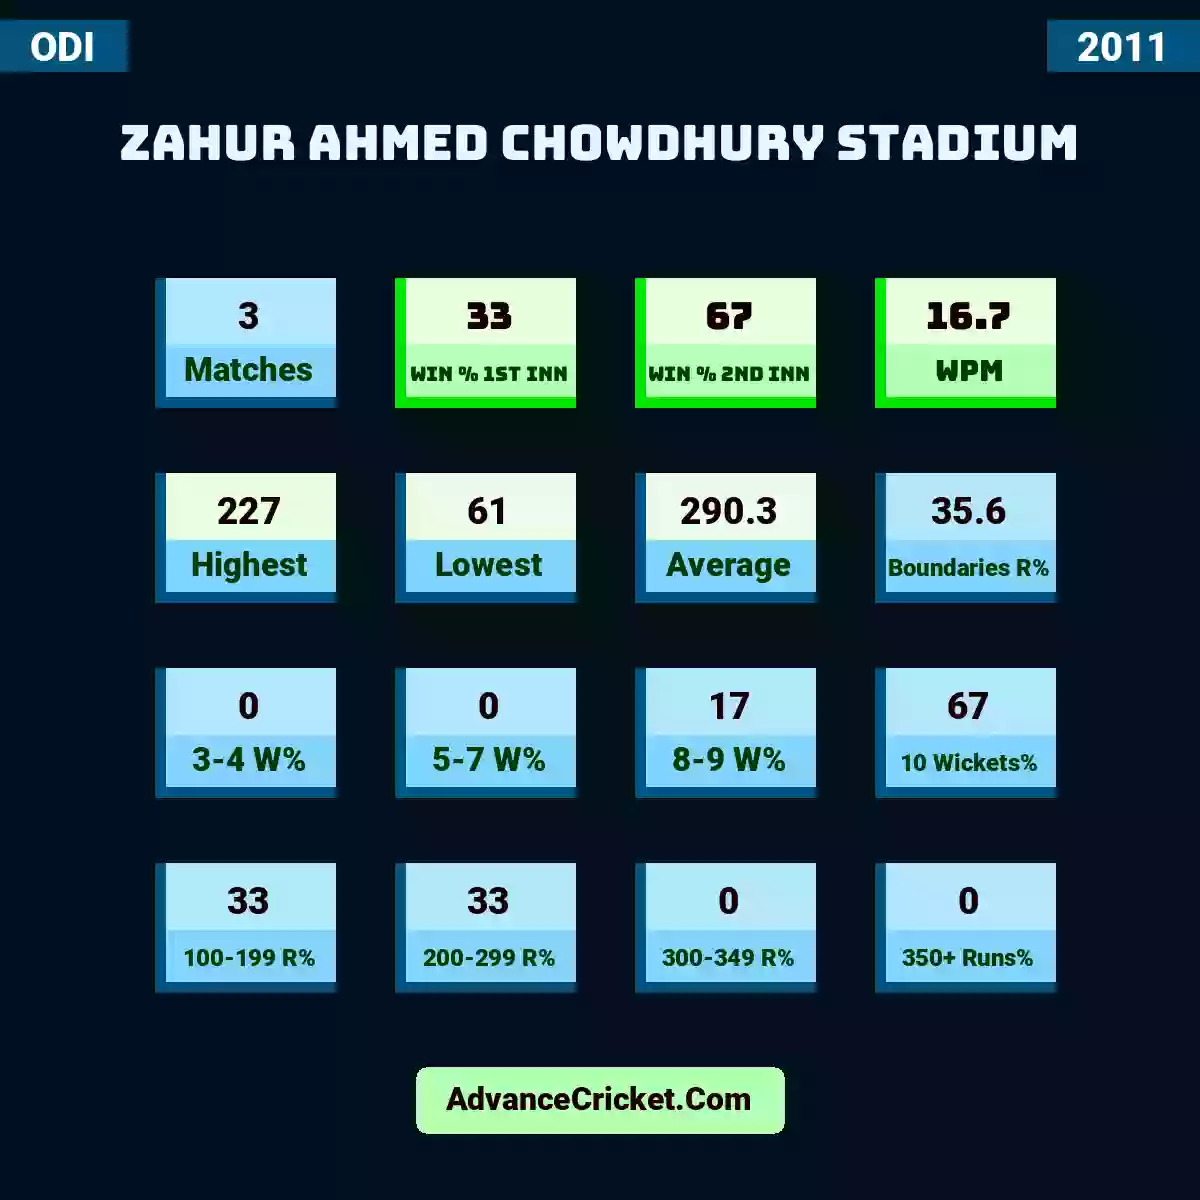 Image showing Zahur Ahmed Chowdhury Stadium with Matches: 3, Win % 1st Inn: 33, Win % 2nd Inn: 67, WPM: 16.7, Highest: 227, Lowest: 61, Average: 290.3, Boundaries R%: 35.6, 3-4 W%: 0, 5-7 W%: 0, 8-9 W%: 17, 10 Wickets%: 67, 100-199 R%: 33, 200-299 R%: 33, 300-349 R%: 0, 350+ Runs%: 0.